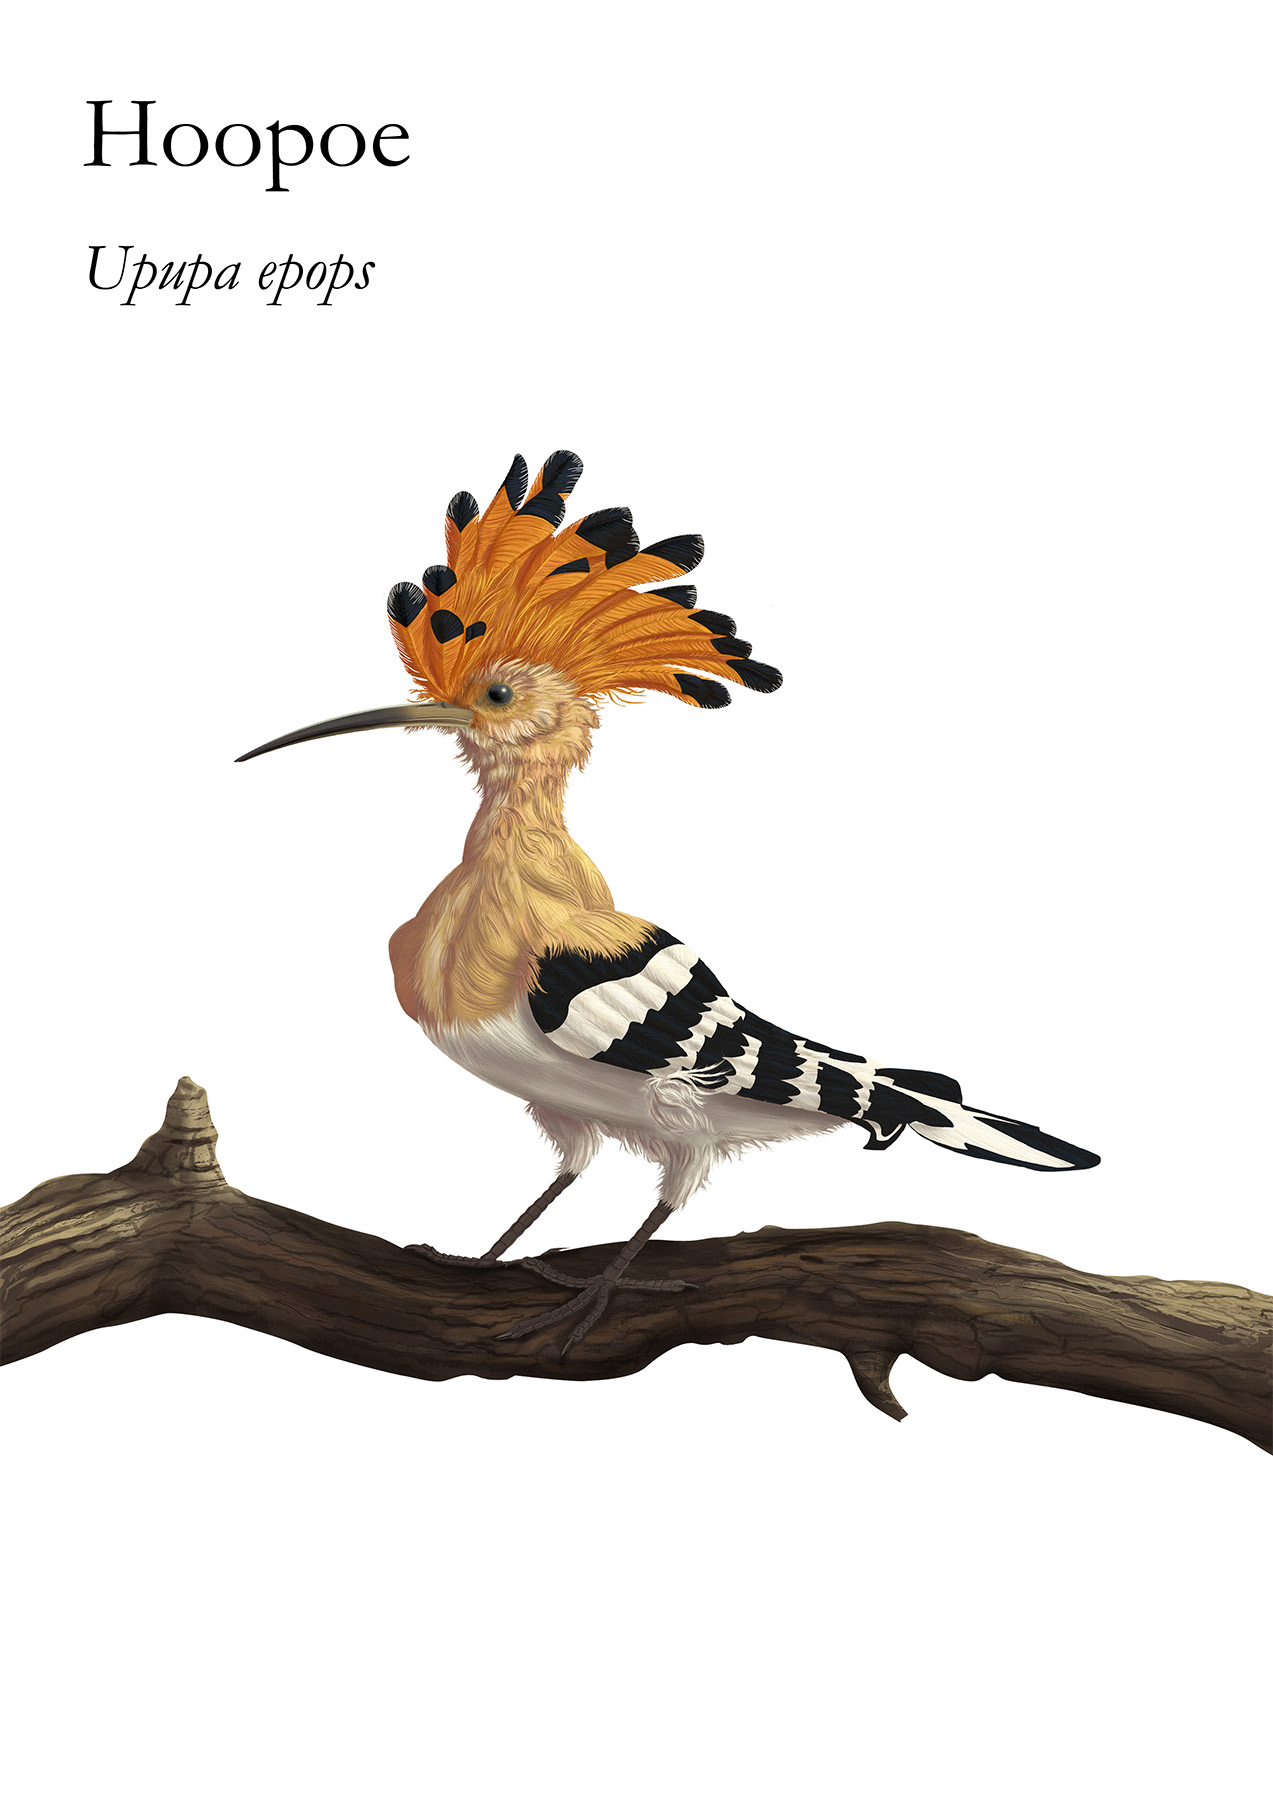 The Hoopoe is a colourful bird found across Afro-Eurasia also called Härfågel